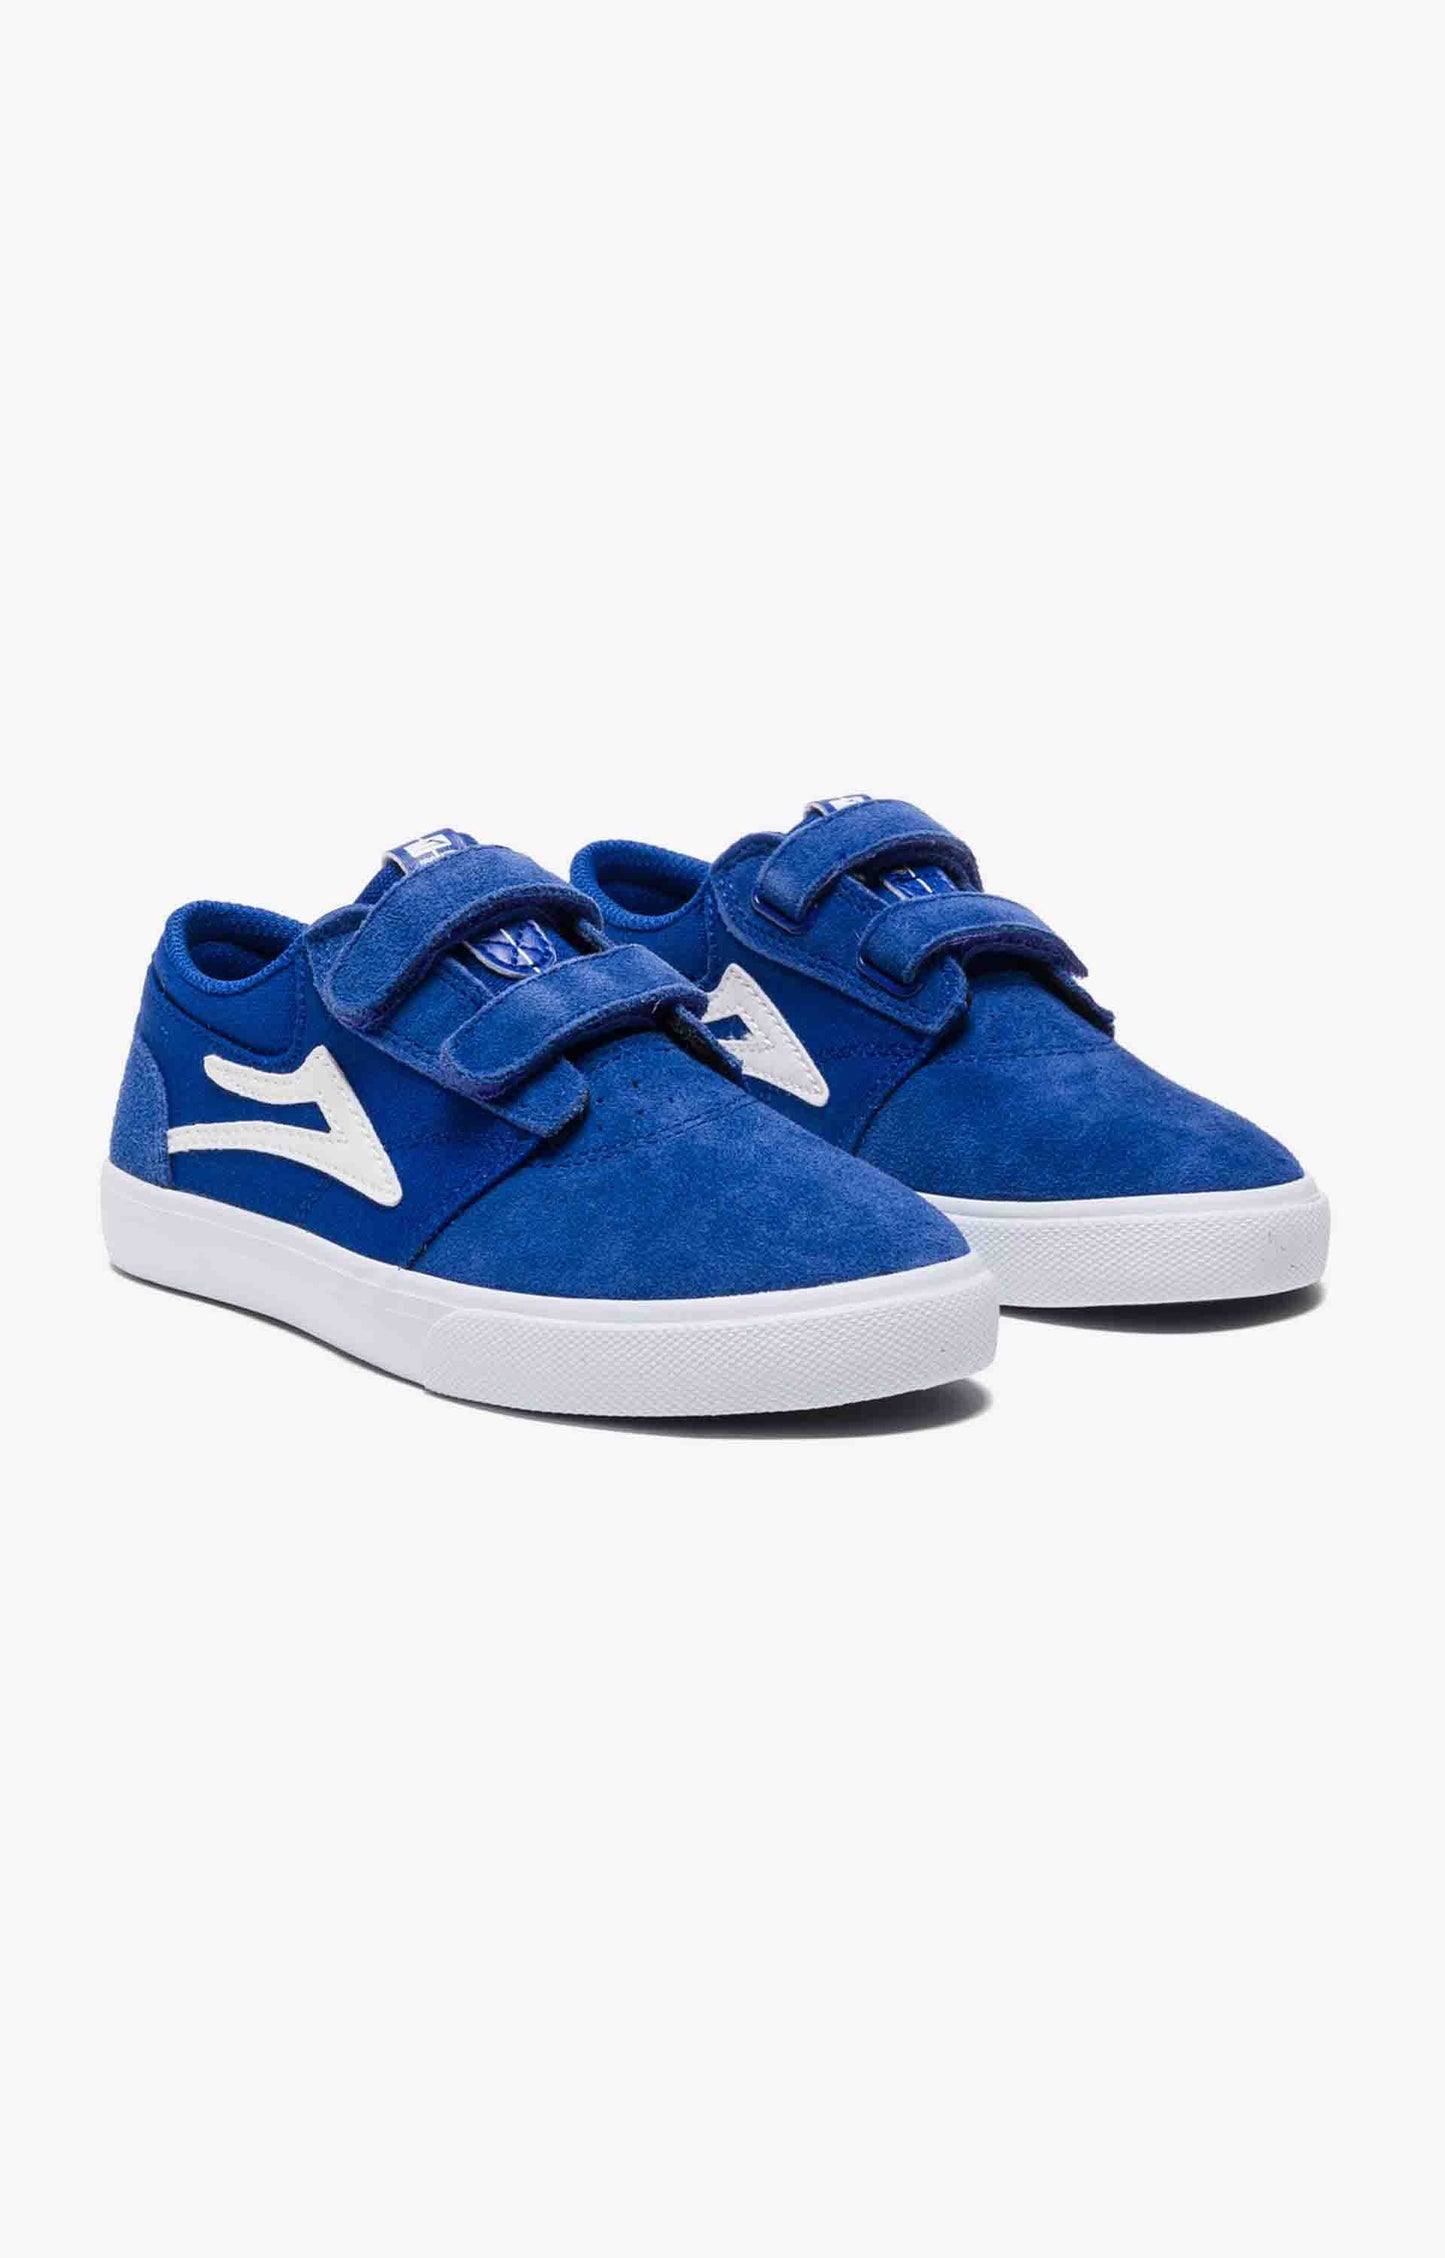 Lakai Griffin Kids Skate Shoe, Blue